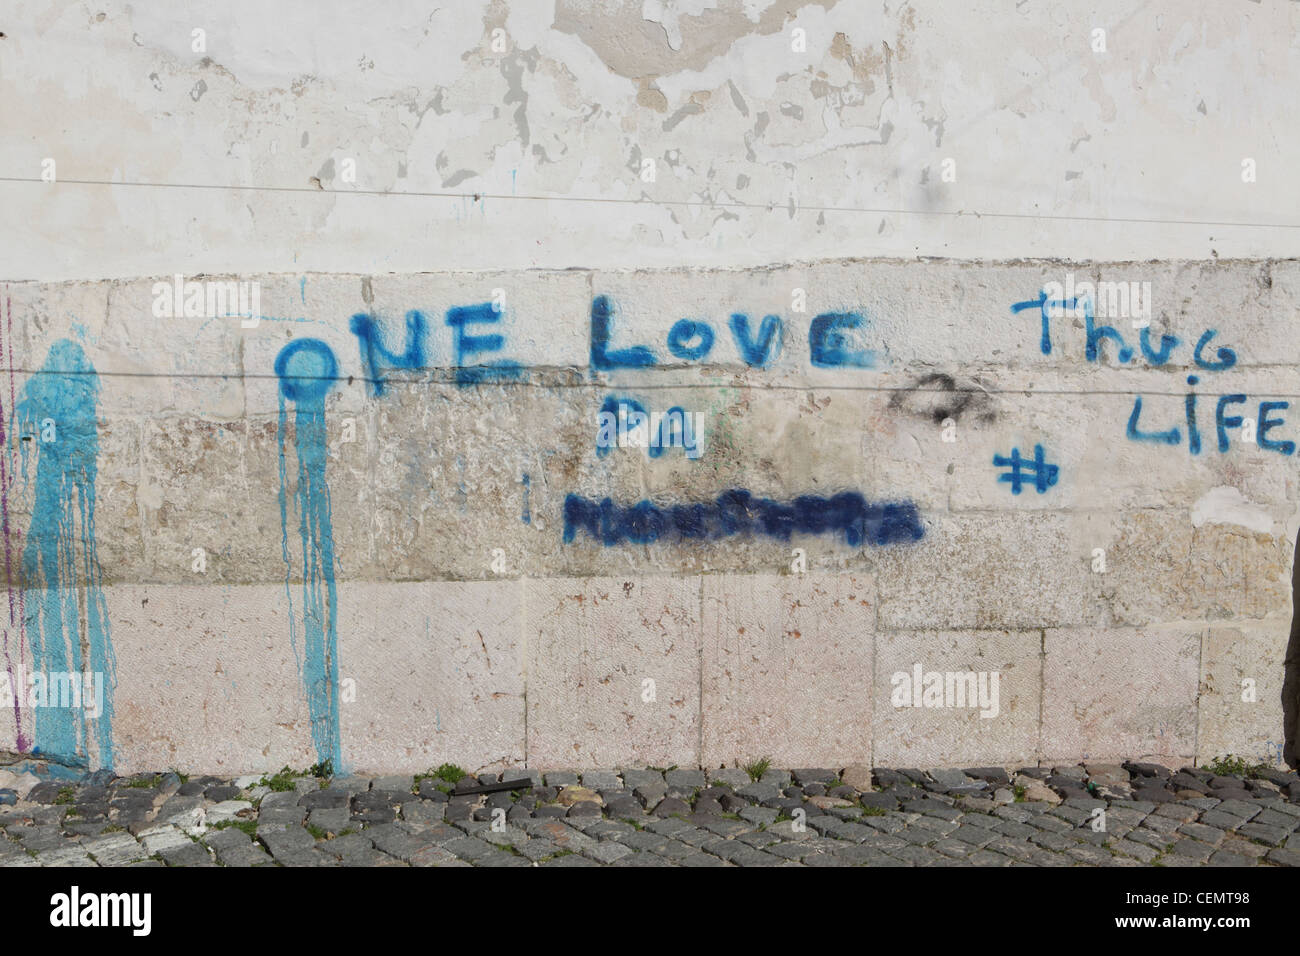 'One Love', 'Thug Life', blue painted graffiti on wall in Lisbon, Portugal, European Capital city. Stock Photo